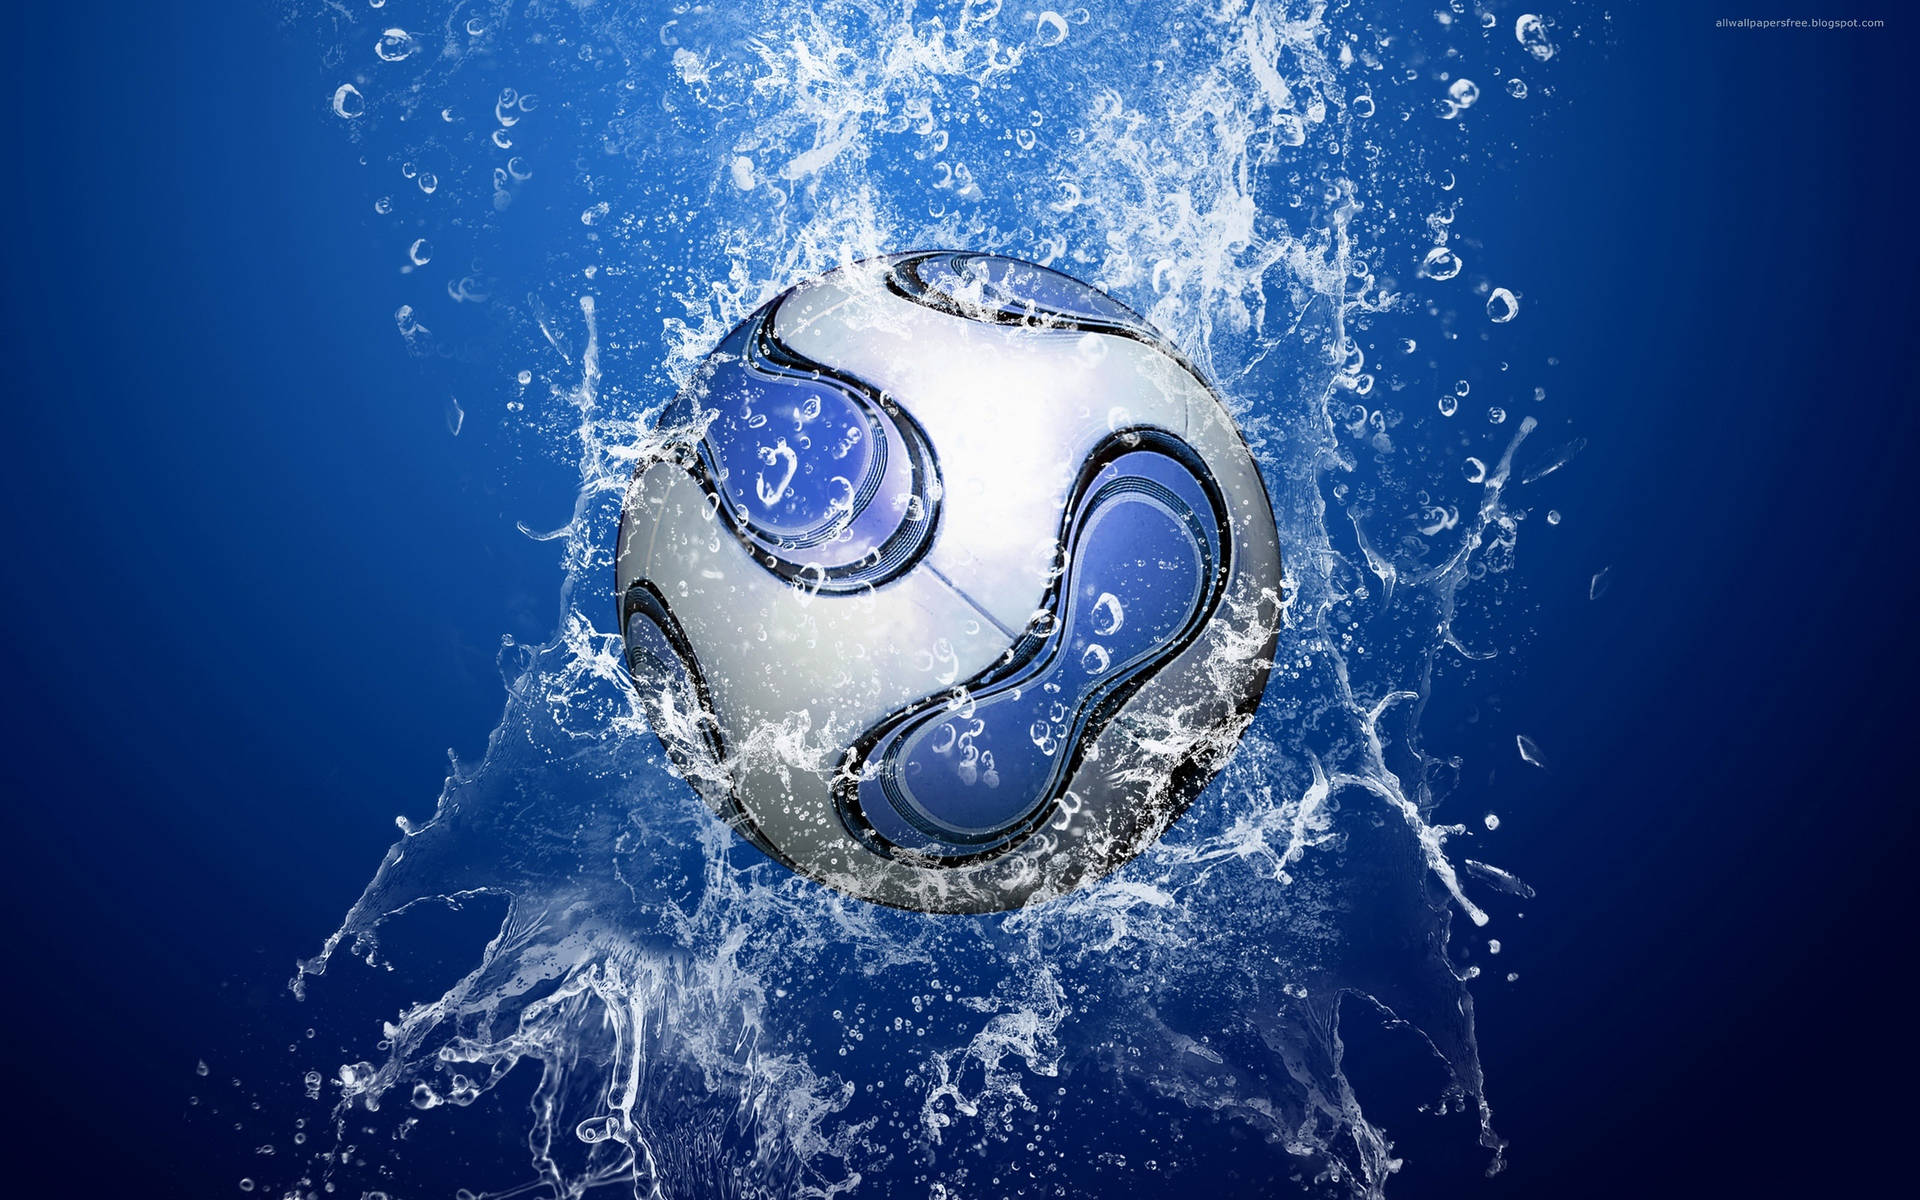 Cool Soccer Ball Water Effect